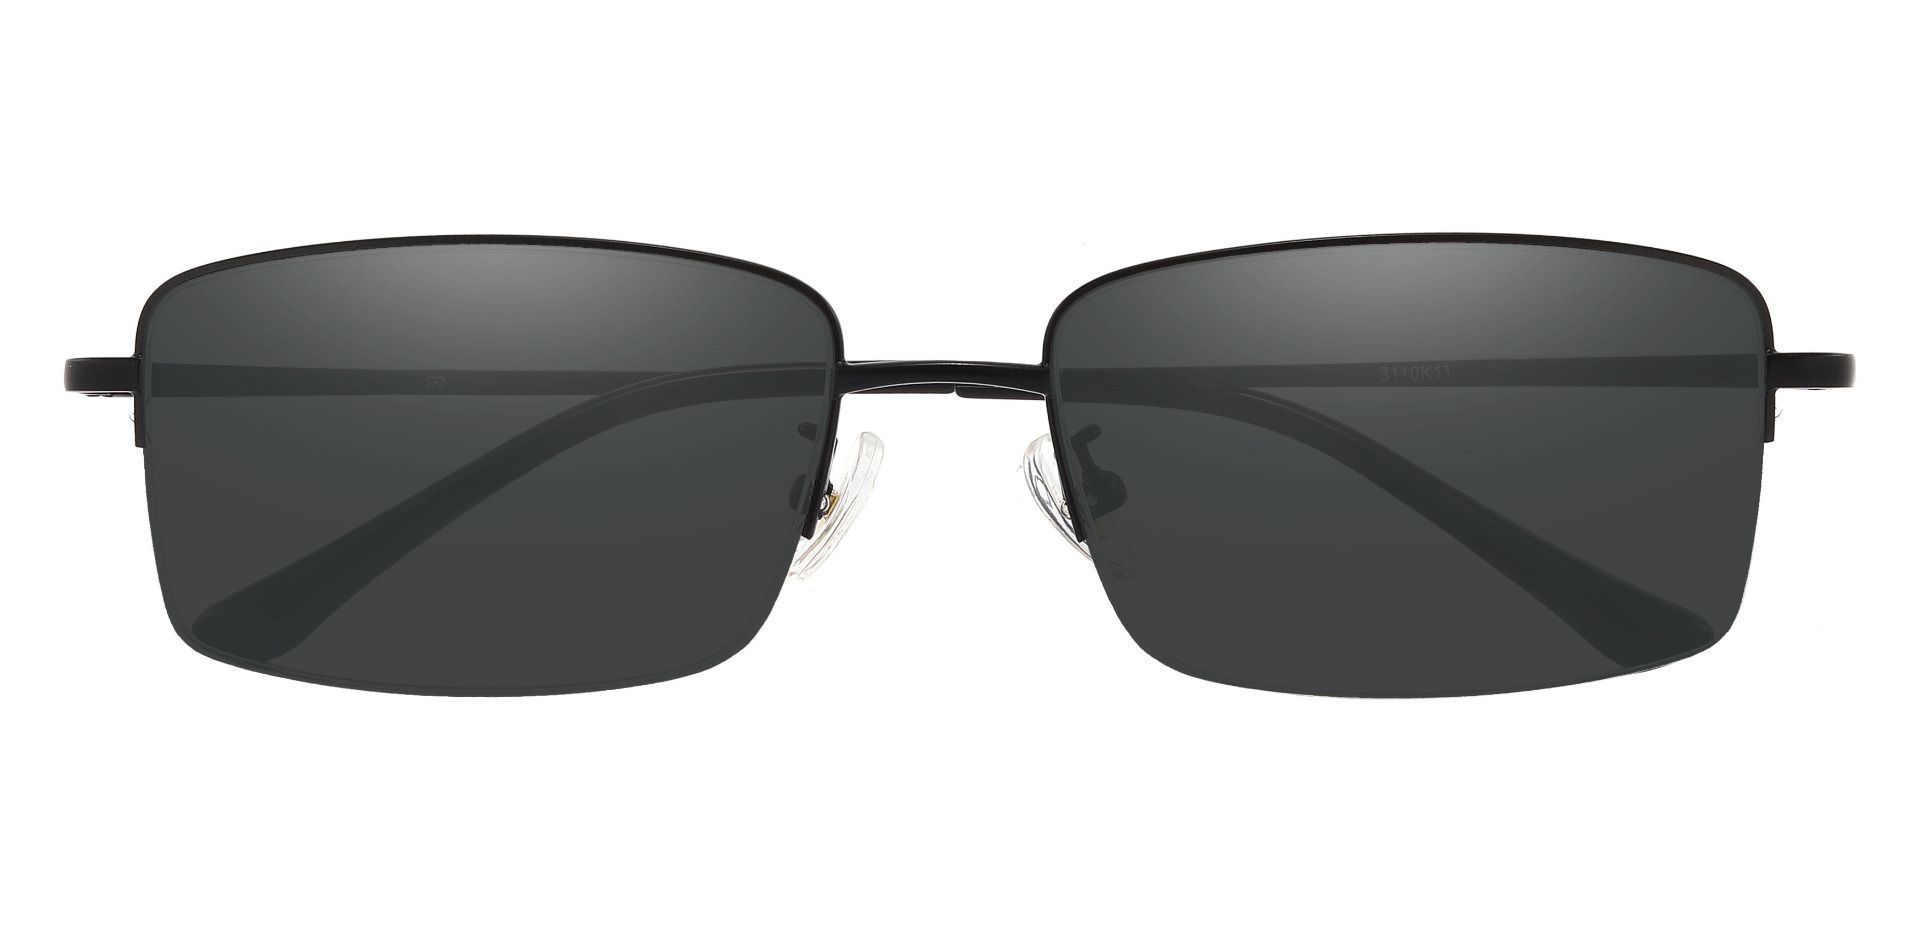 Bellmont Rectangle Prescription Sunglasses - Black Frame With Gray Lenses